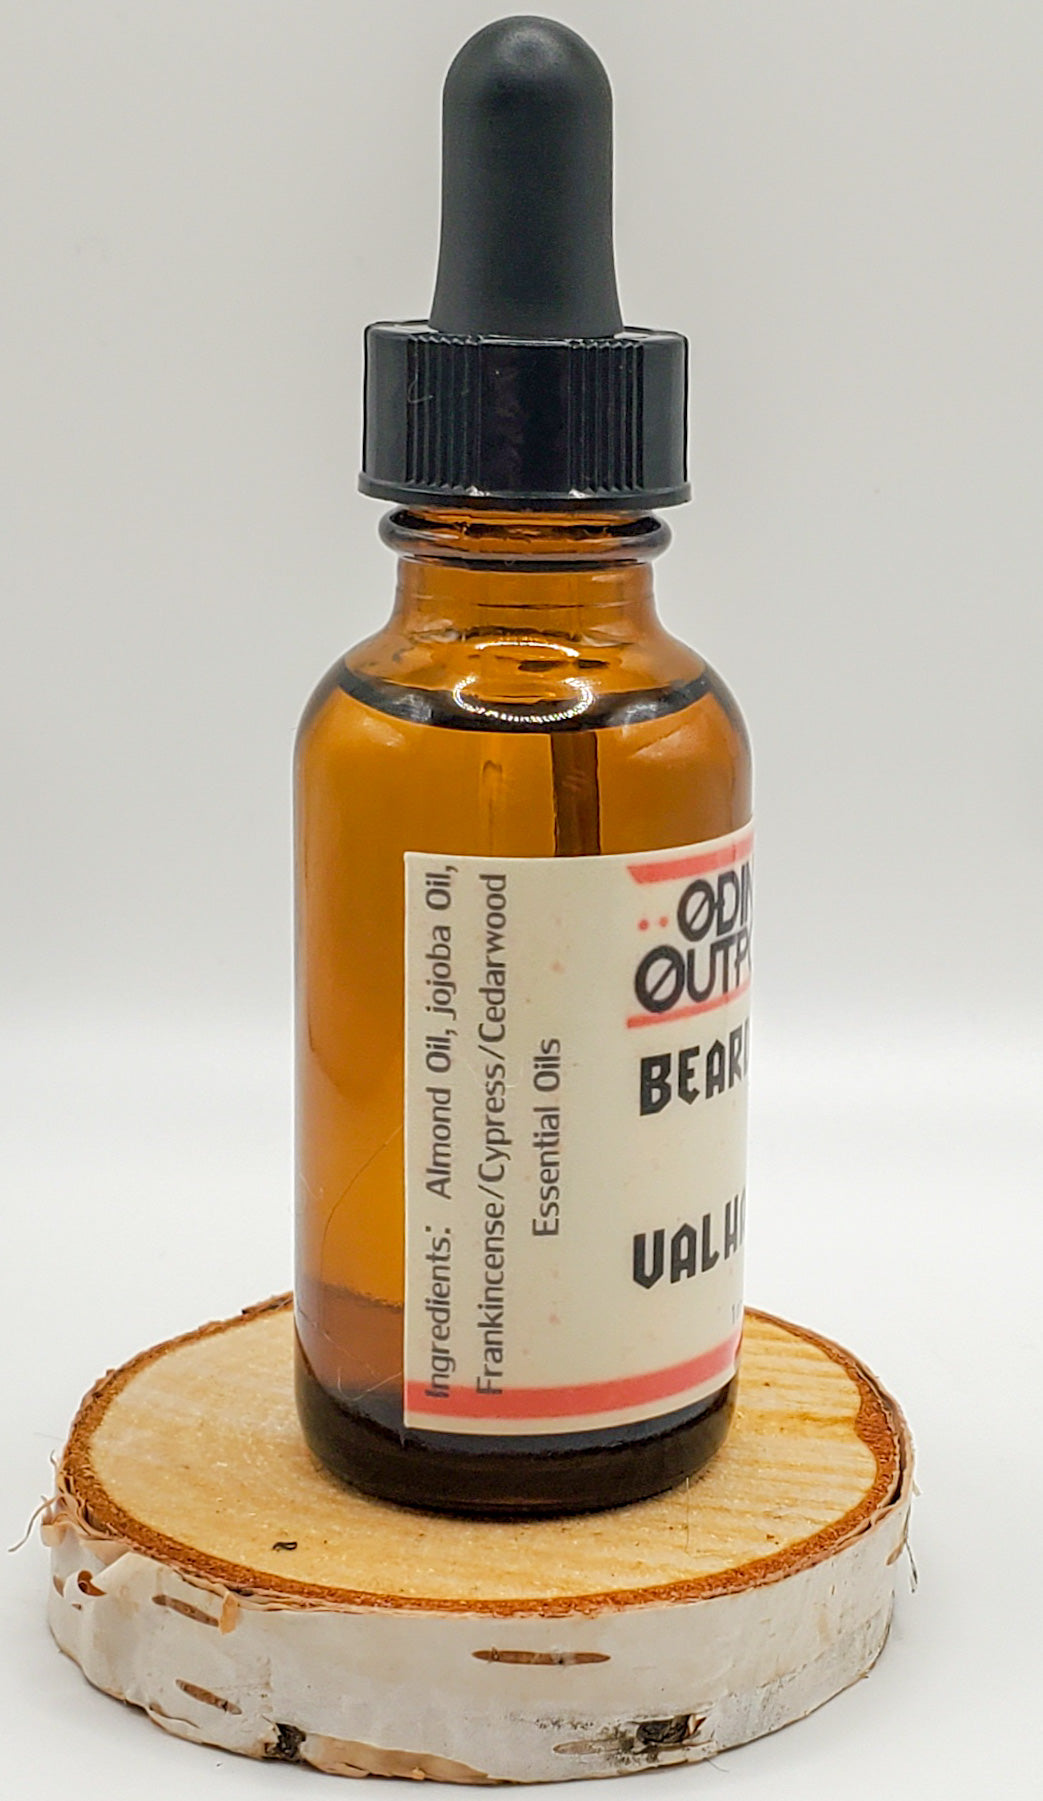 Valhalla Beard Oil // Frankincense Cypress Cedarwood Beard Balm